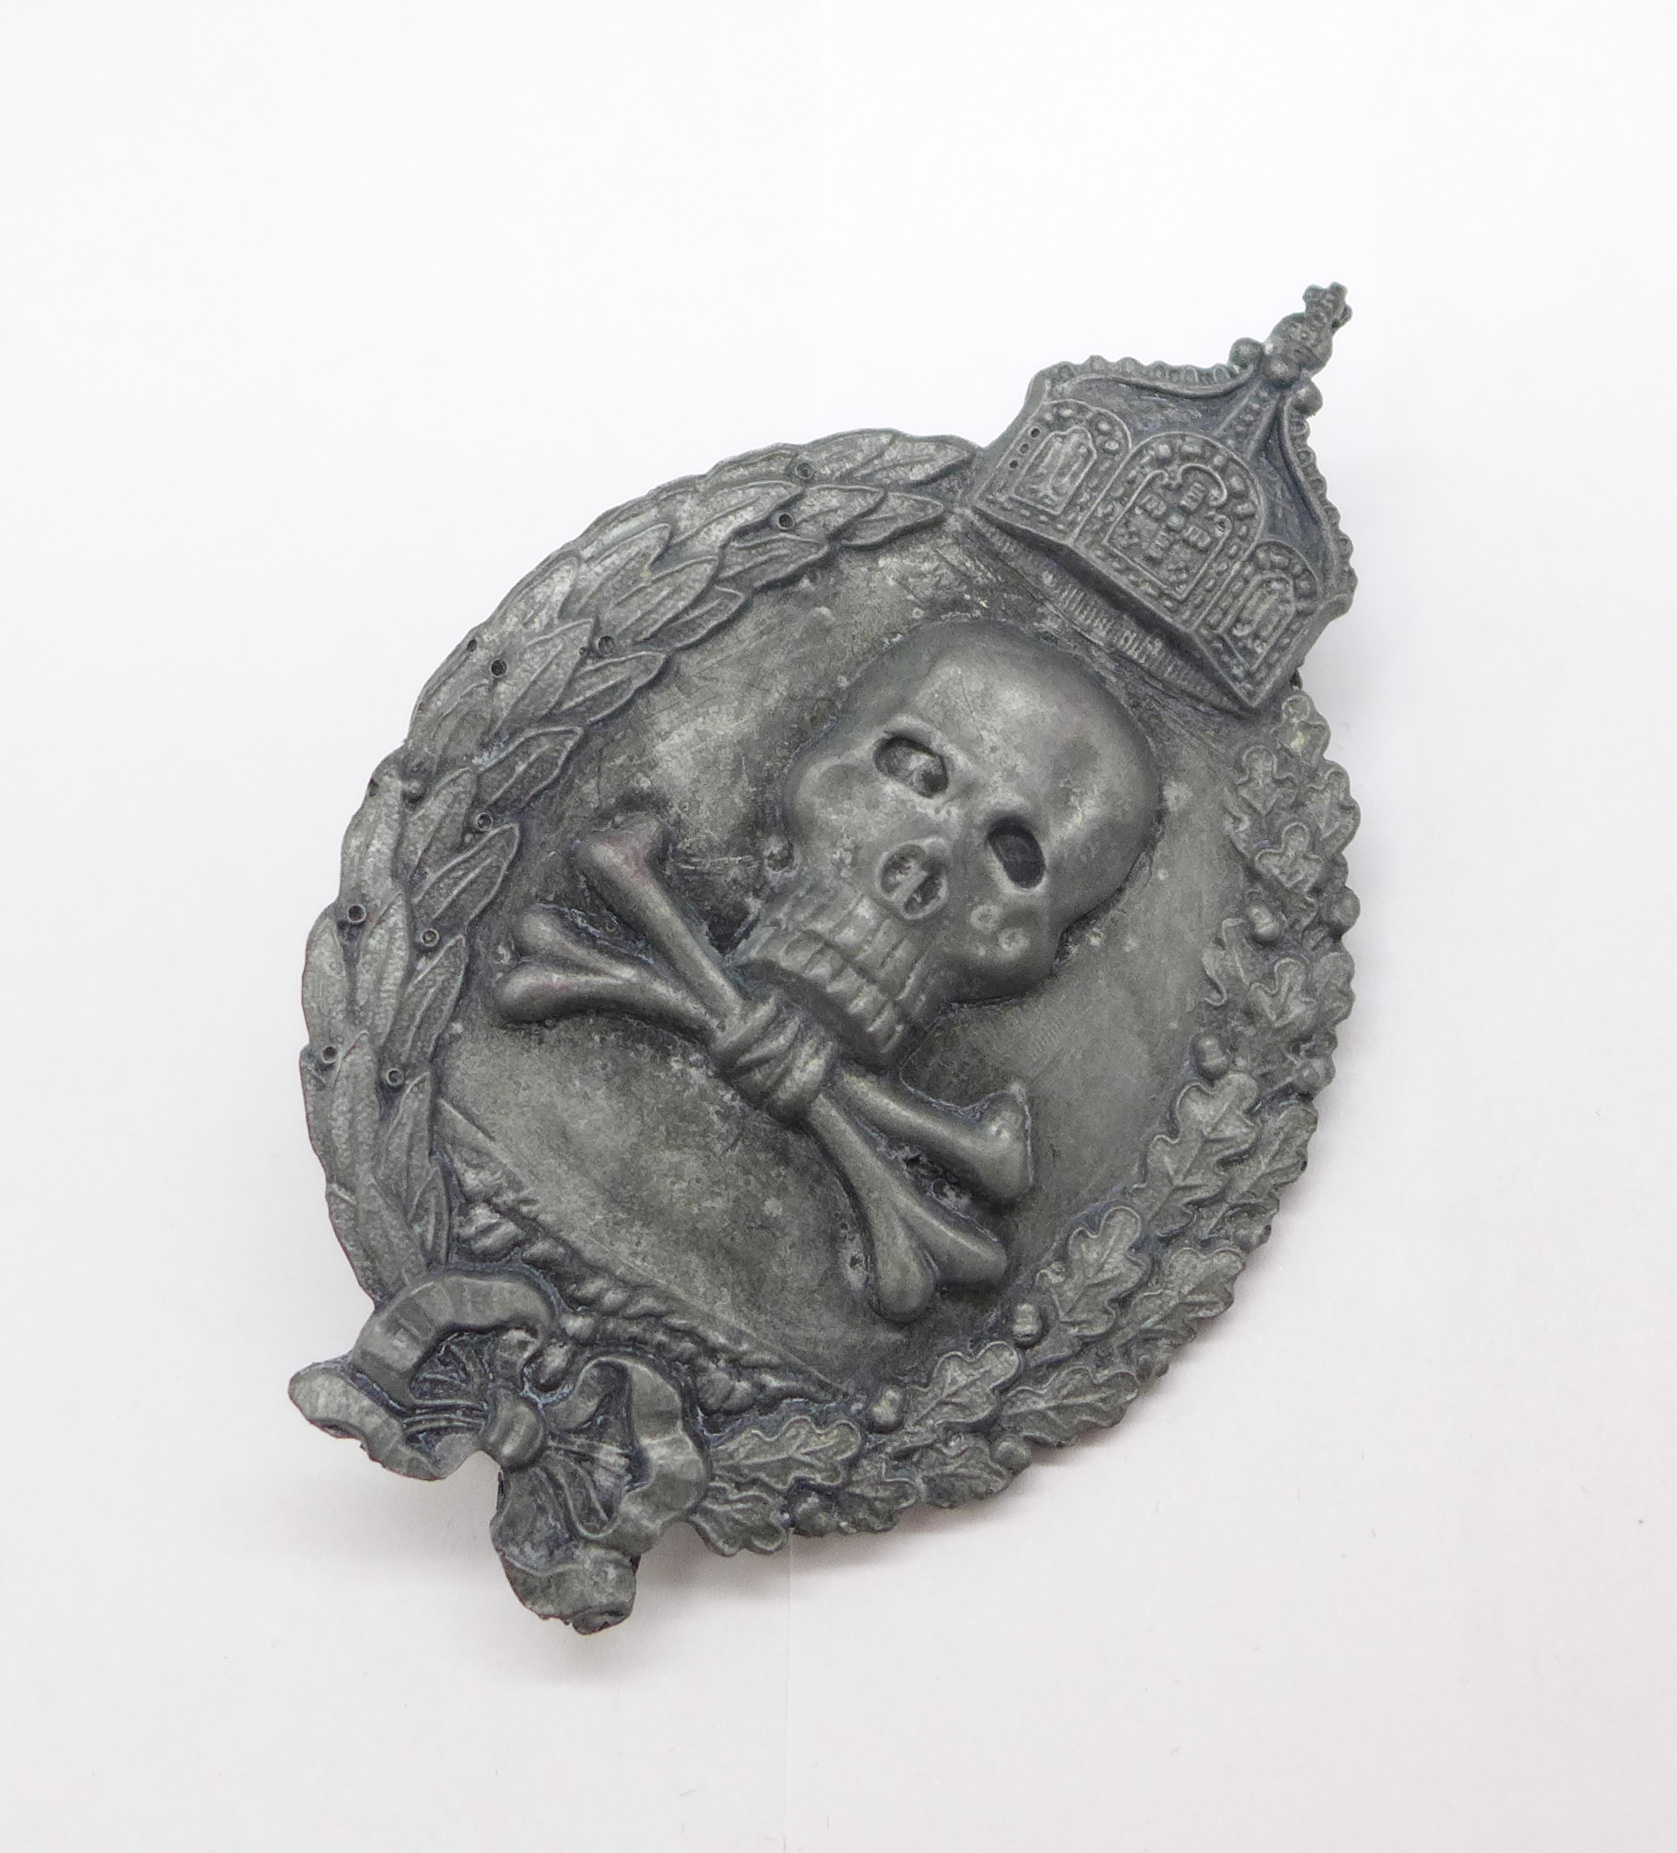 A WWI Imperial German skull and bones badge